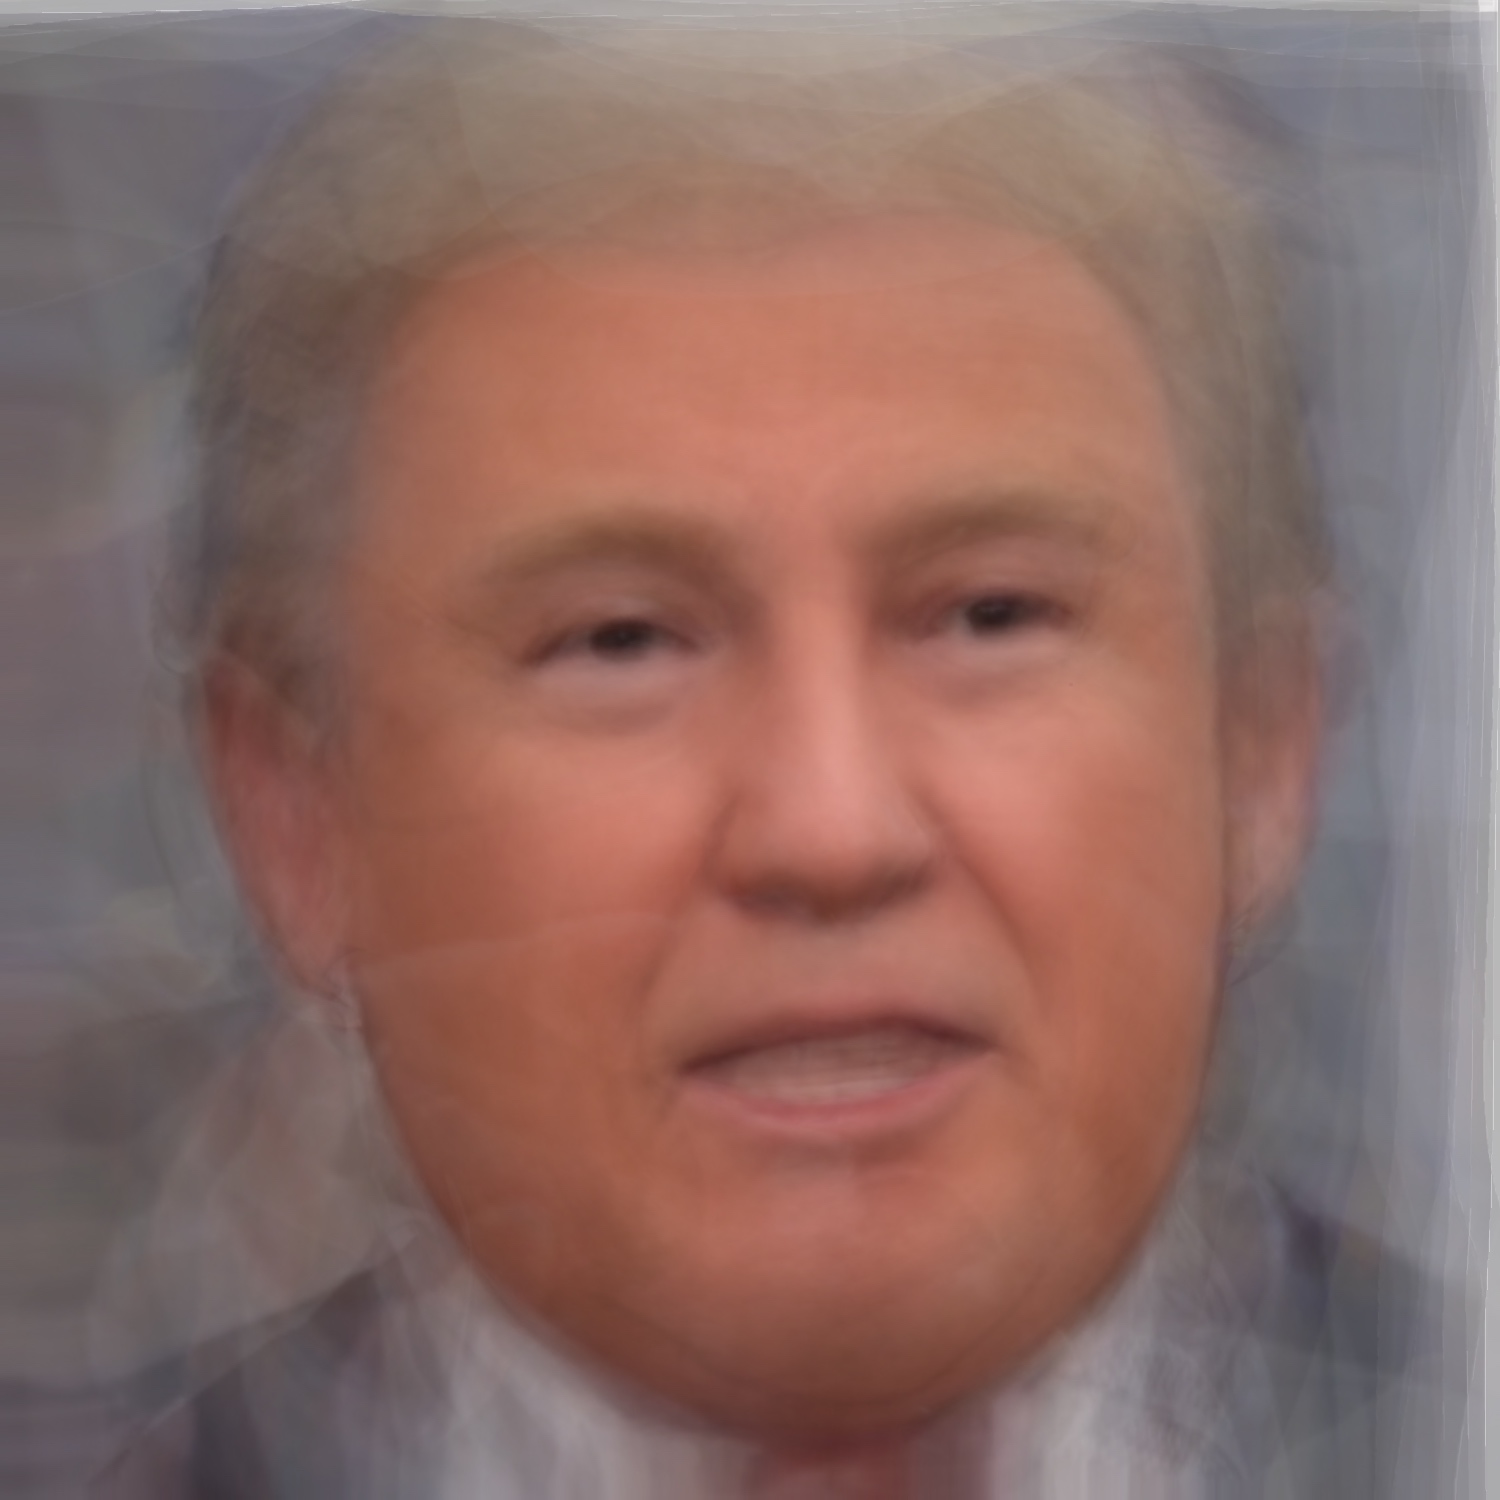 The President インターネット世界における欲望の肖像